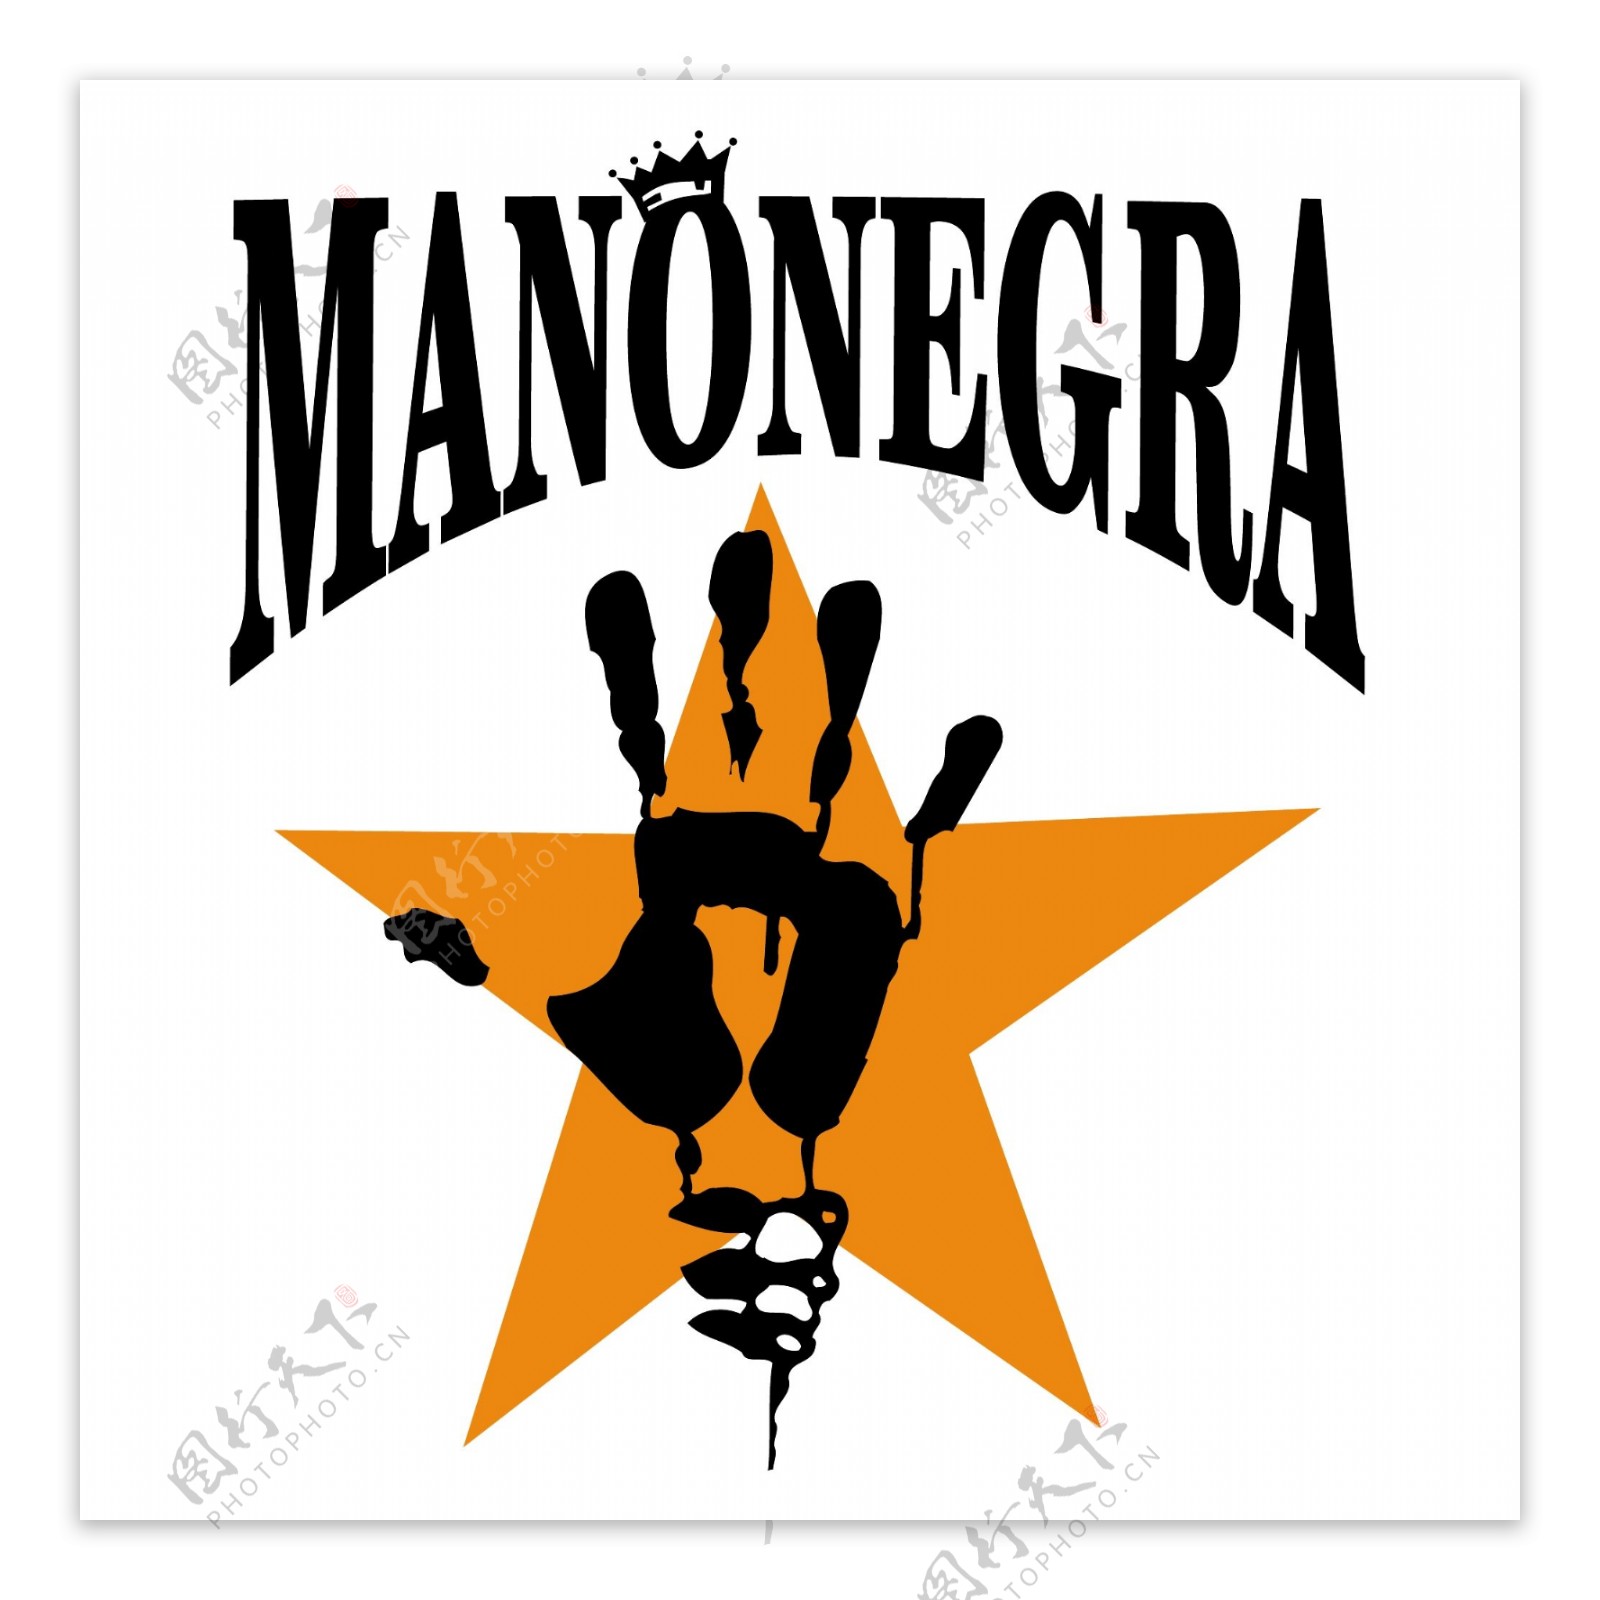 ManoNegra